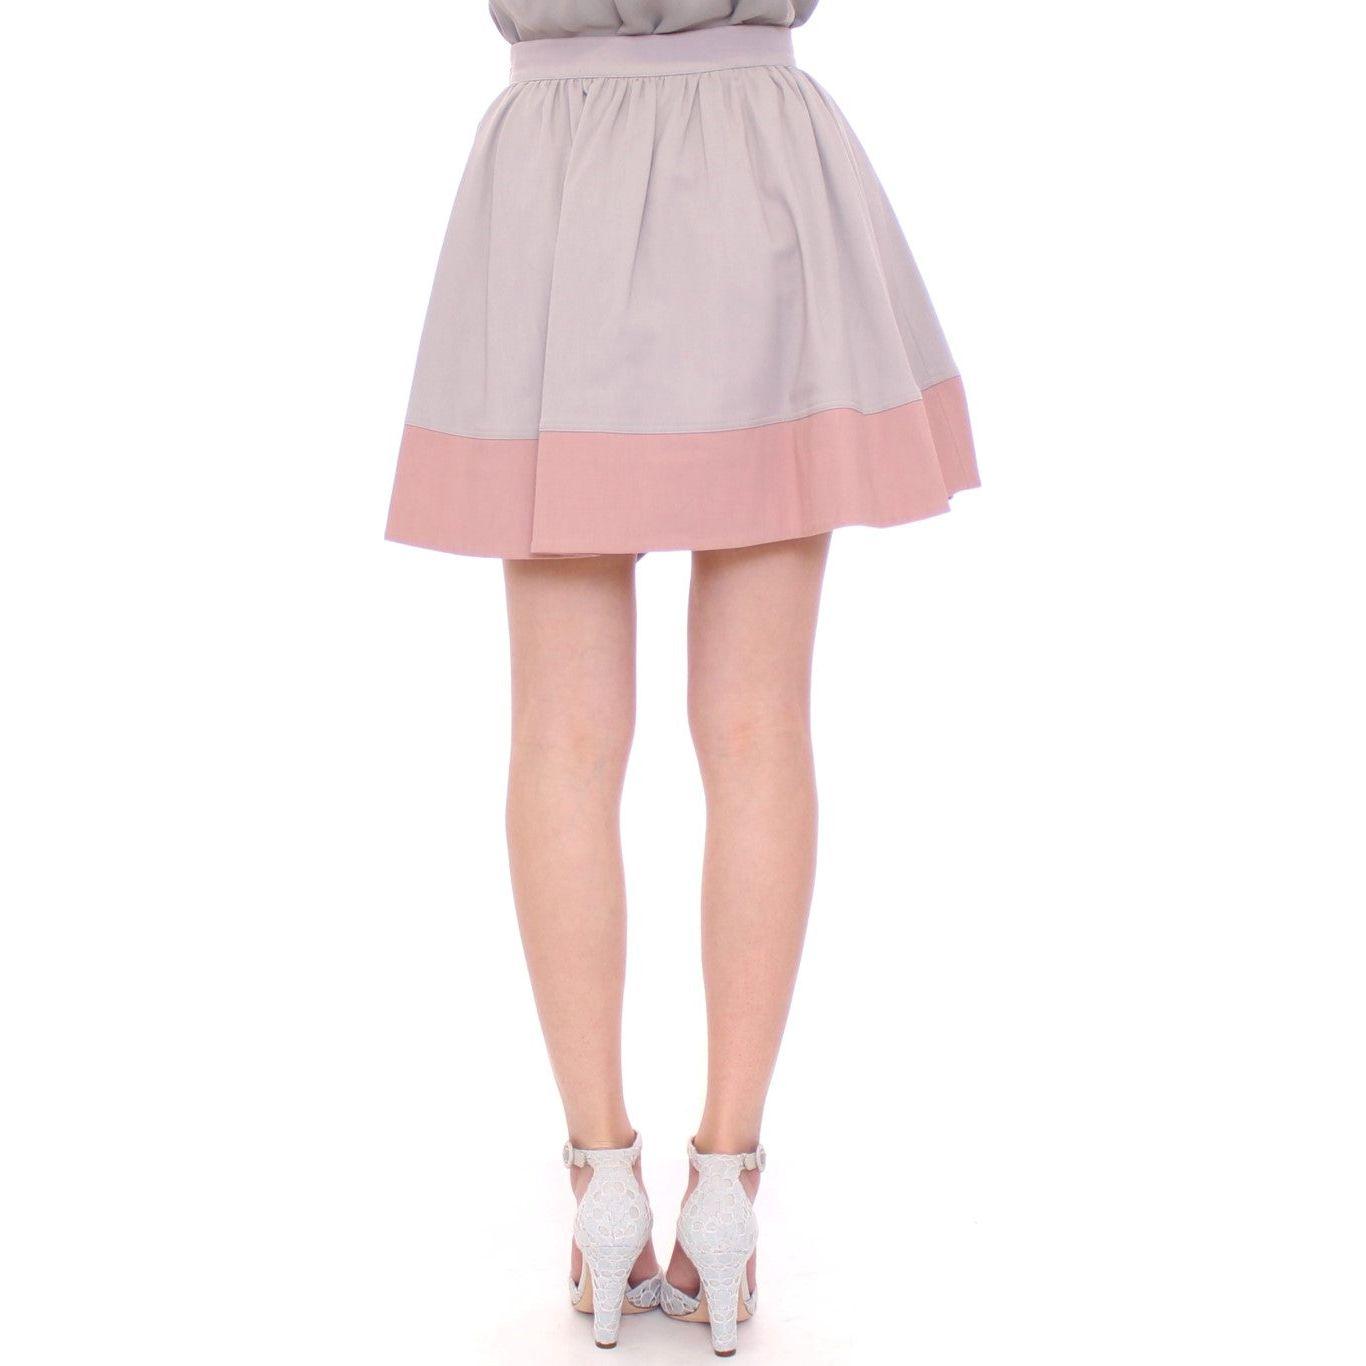 Comeforbreakfast Sleek Pleated Mini Skirt in Pink and Gray pink-gray-mini-short-pleated-skirt 219781-pink-gray-mini-short-pleated-skirt-2.jpg